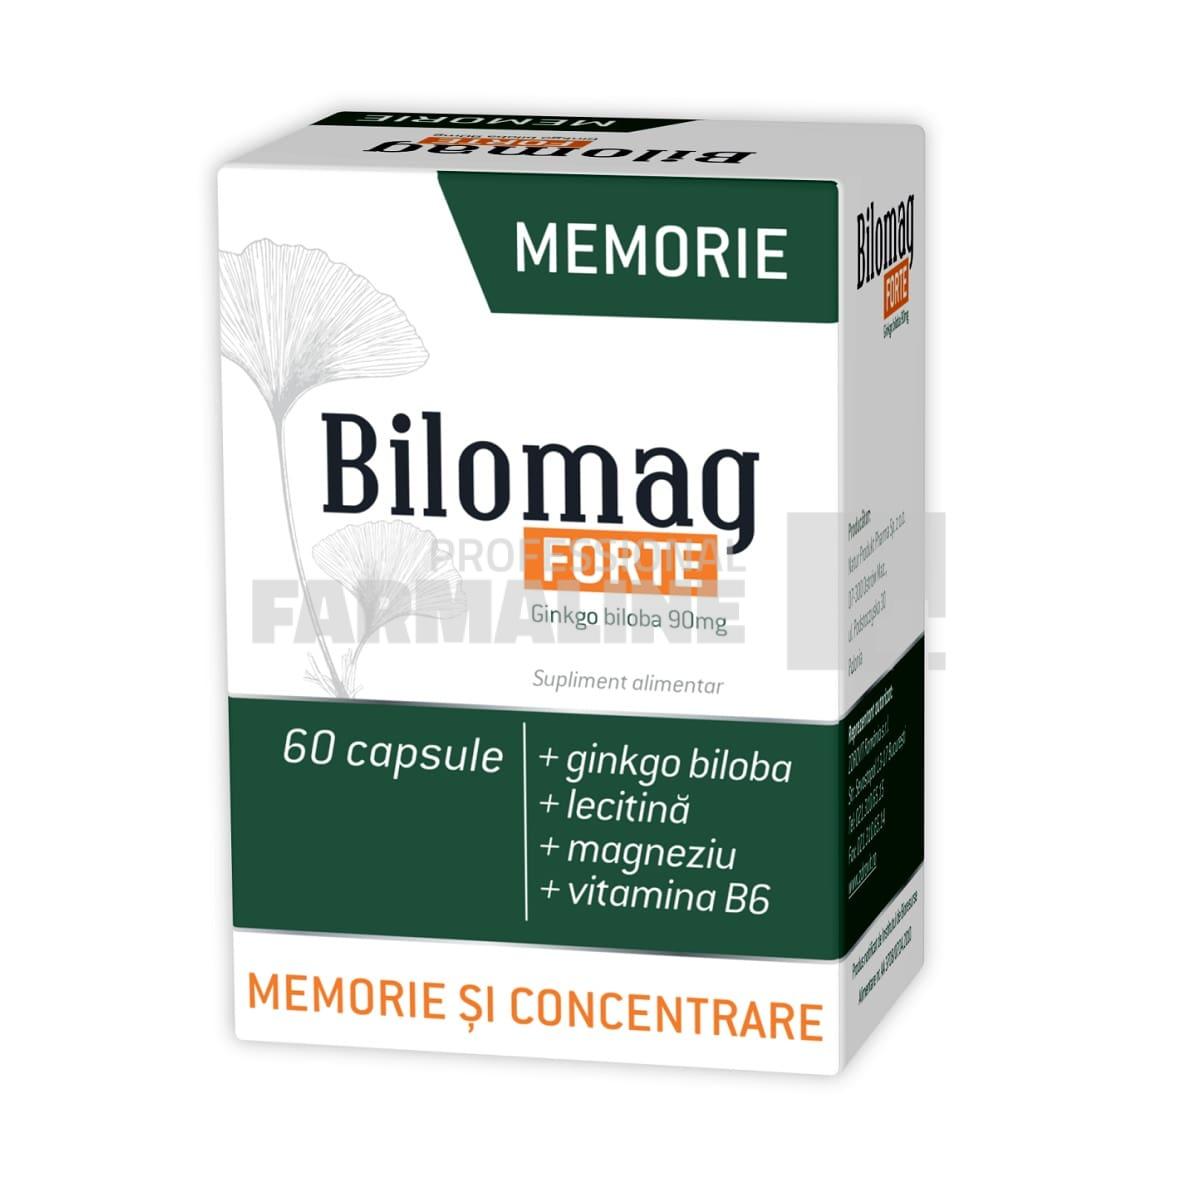 bilomag forte memorie 90 capsule + 30 cadou Bilomag Forte Memorie 90 mg 60 capsule